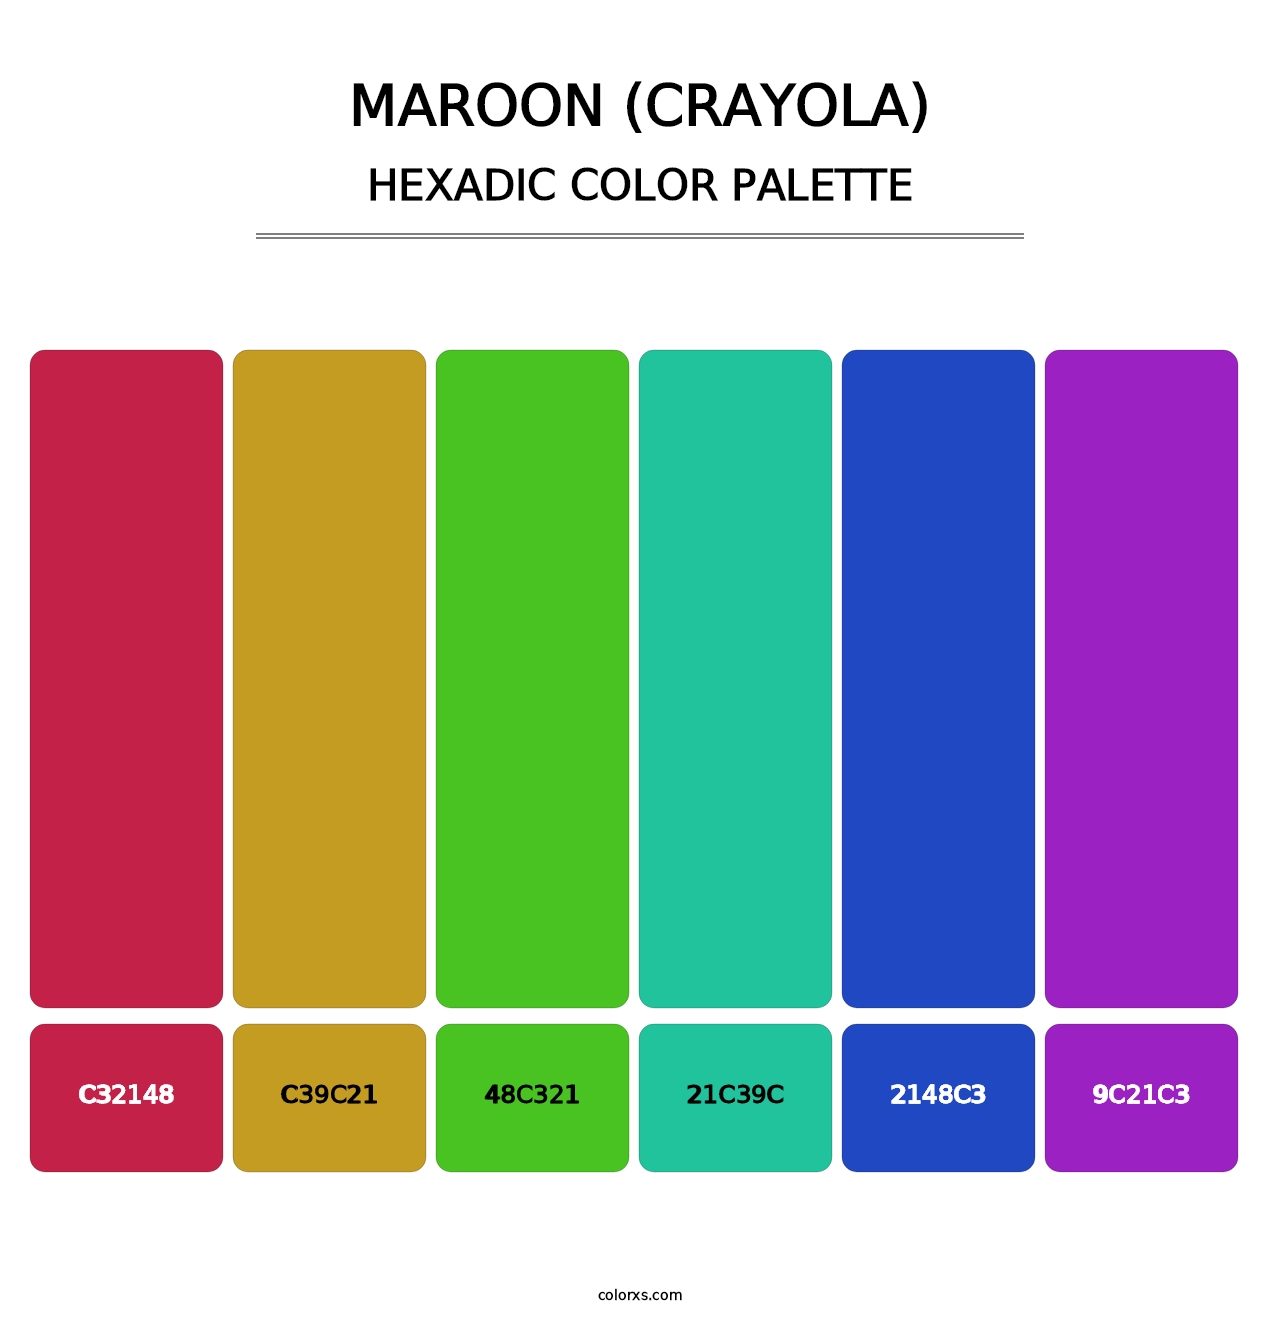 Maroon (Crayola) - Hexadic Color Palette